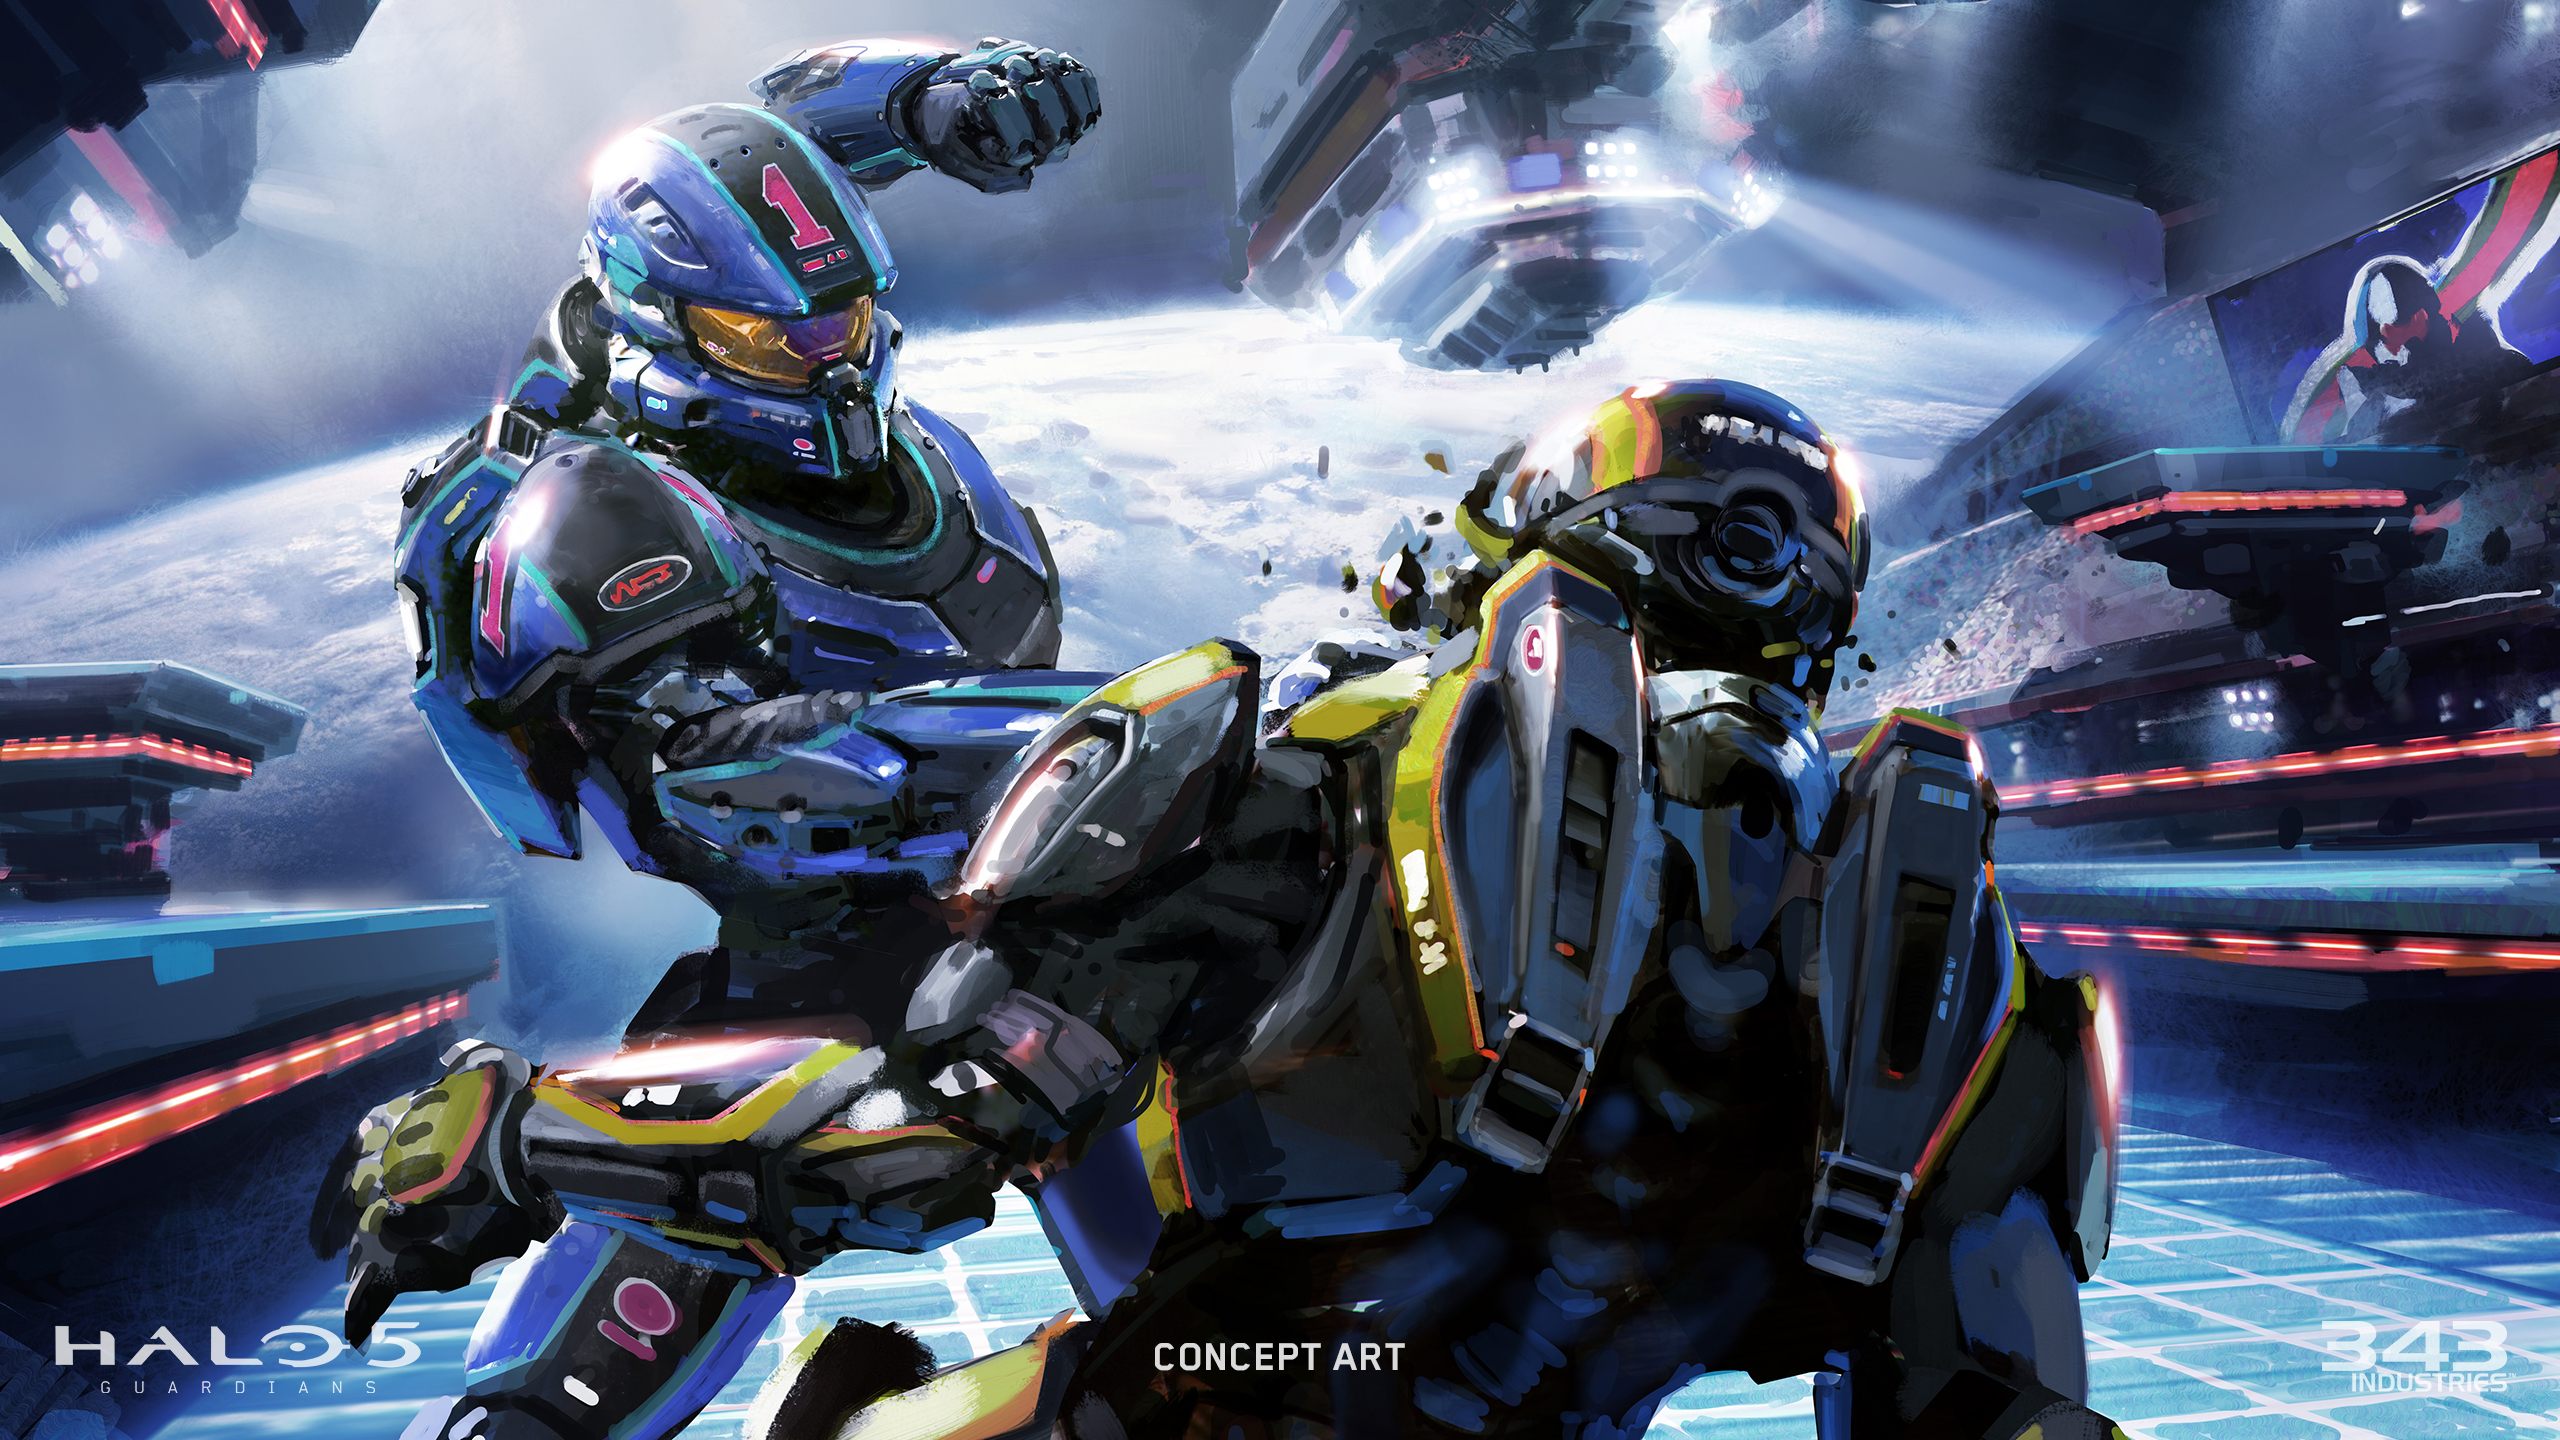 General 2560x1440 video games Halo (game) futuristic armor digital art video game art concept art Spartans (Halo) Halo 5: Guardians battle space planet